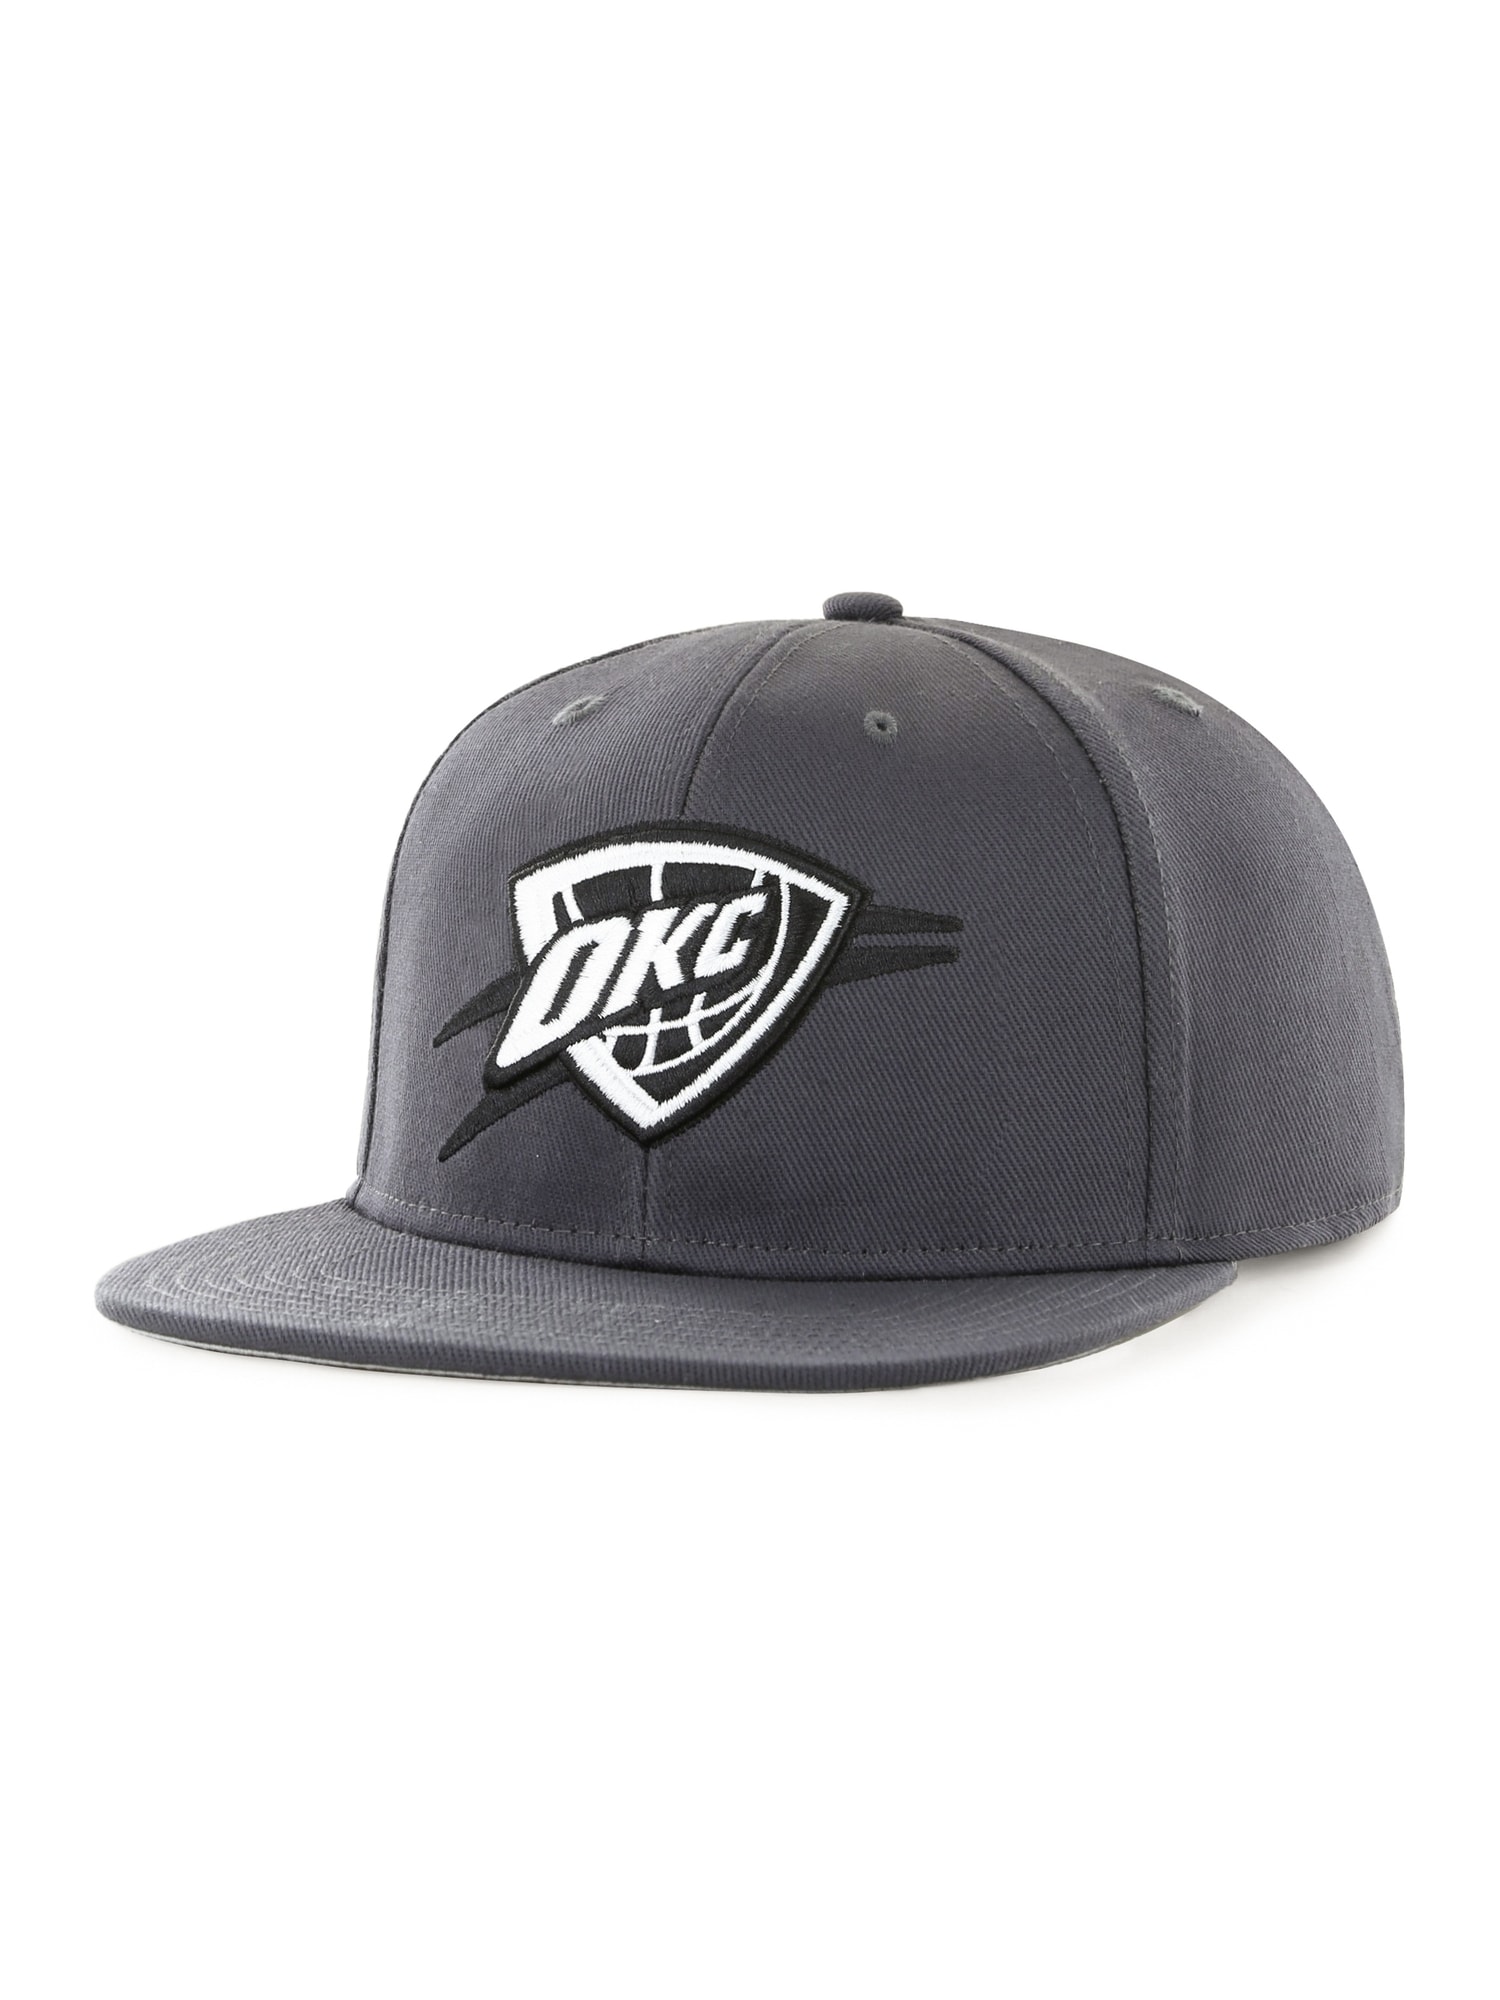 Men's Mitchell & Ness Black/White Oklahoma City Thunder Snapback Adjustable  Hat